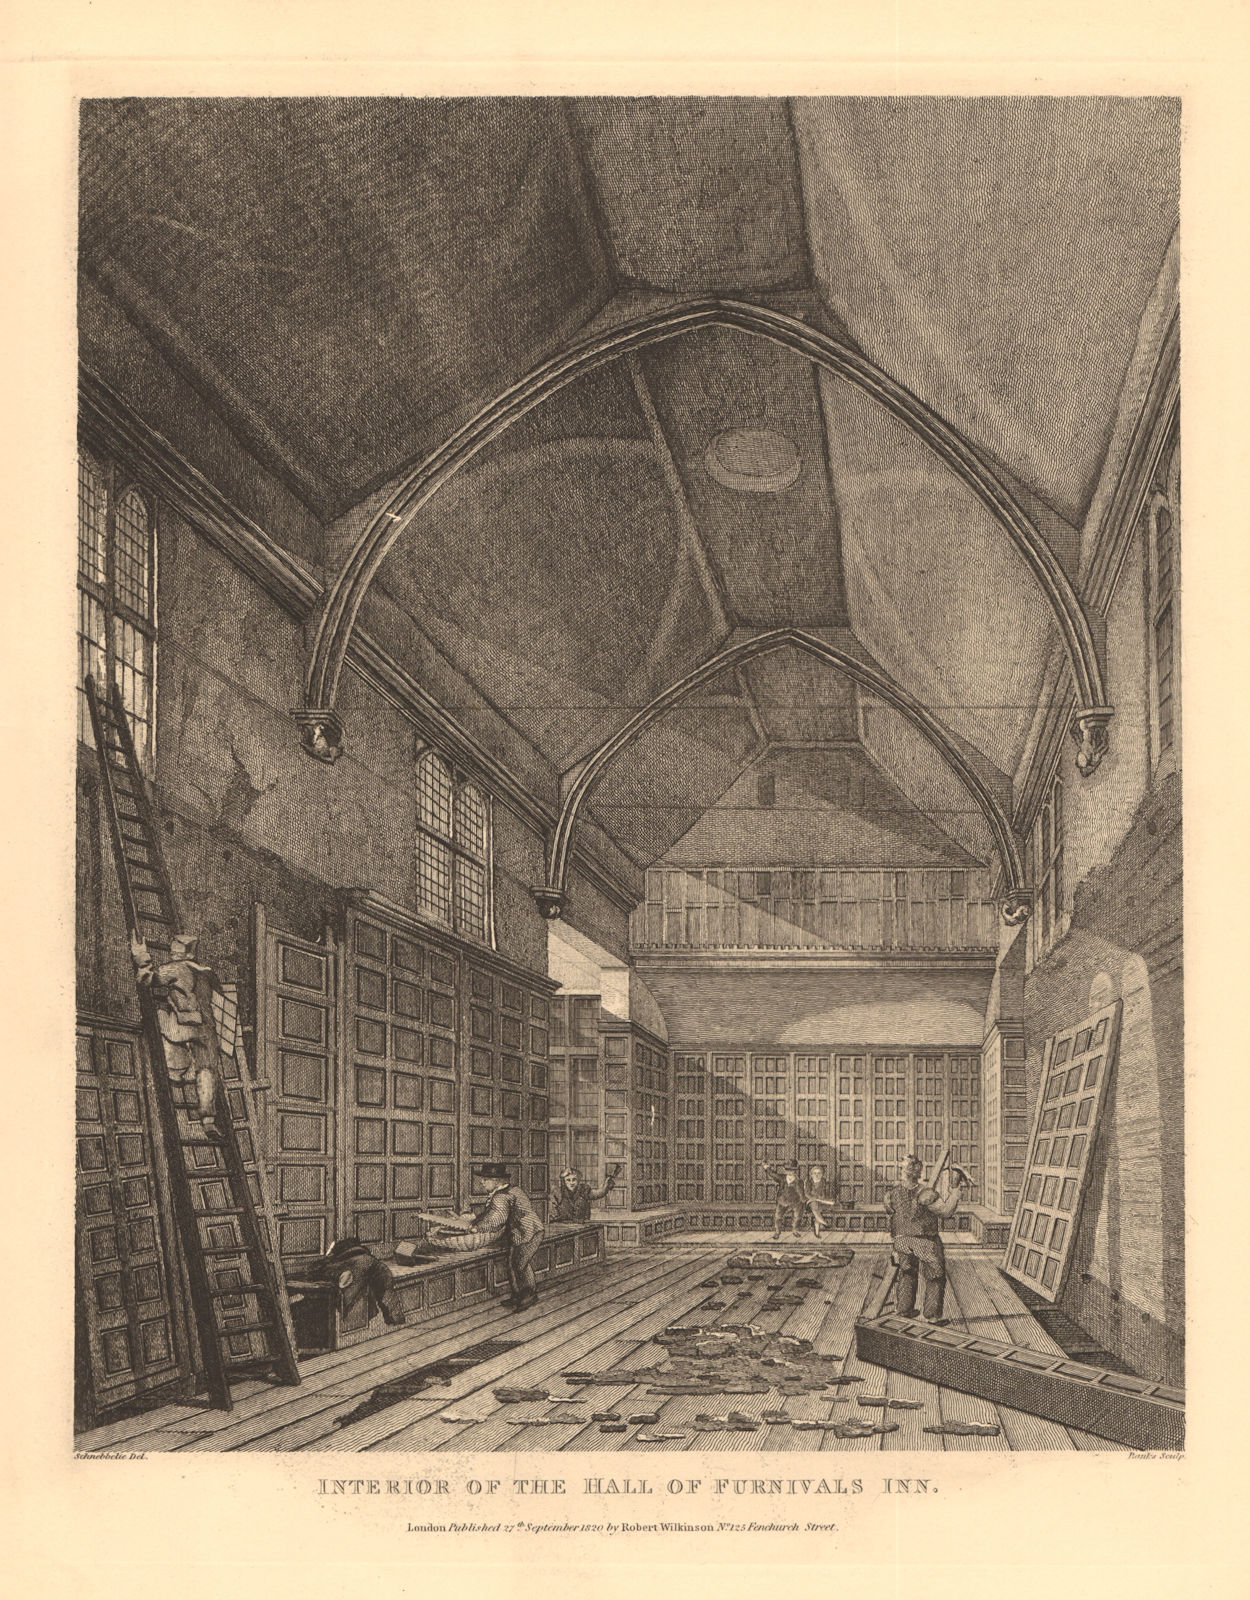 FURNIVALS INN. Interior of the hall. Holborn, London. Inn of Chancery 1834